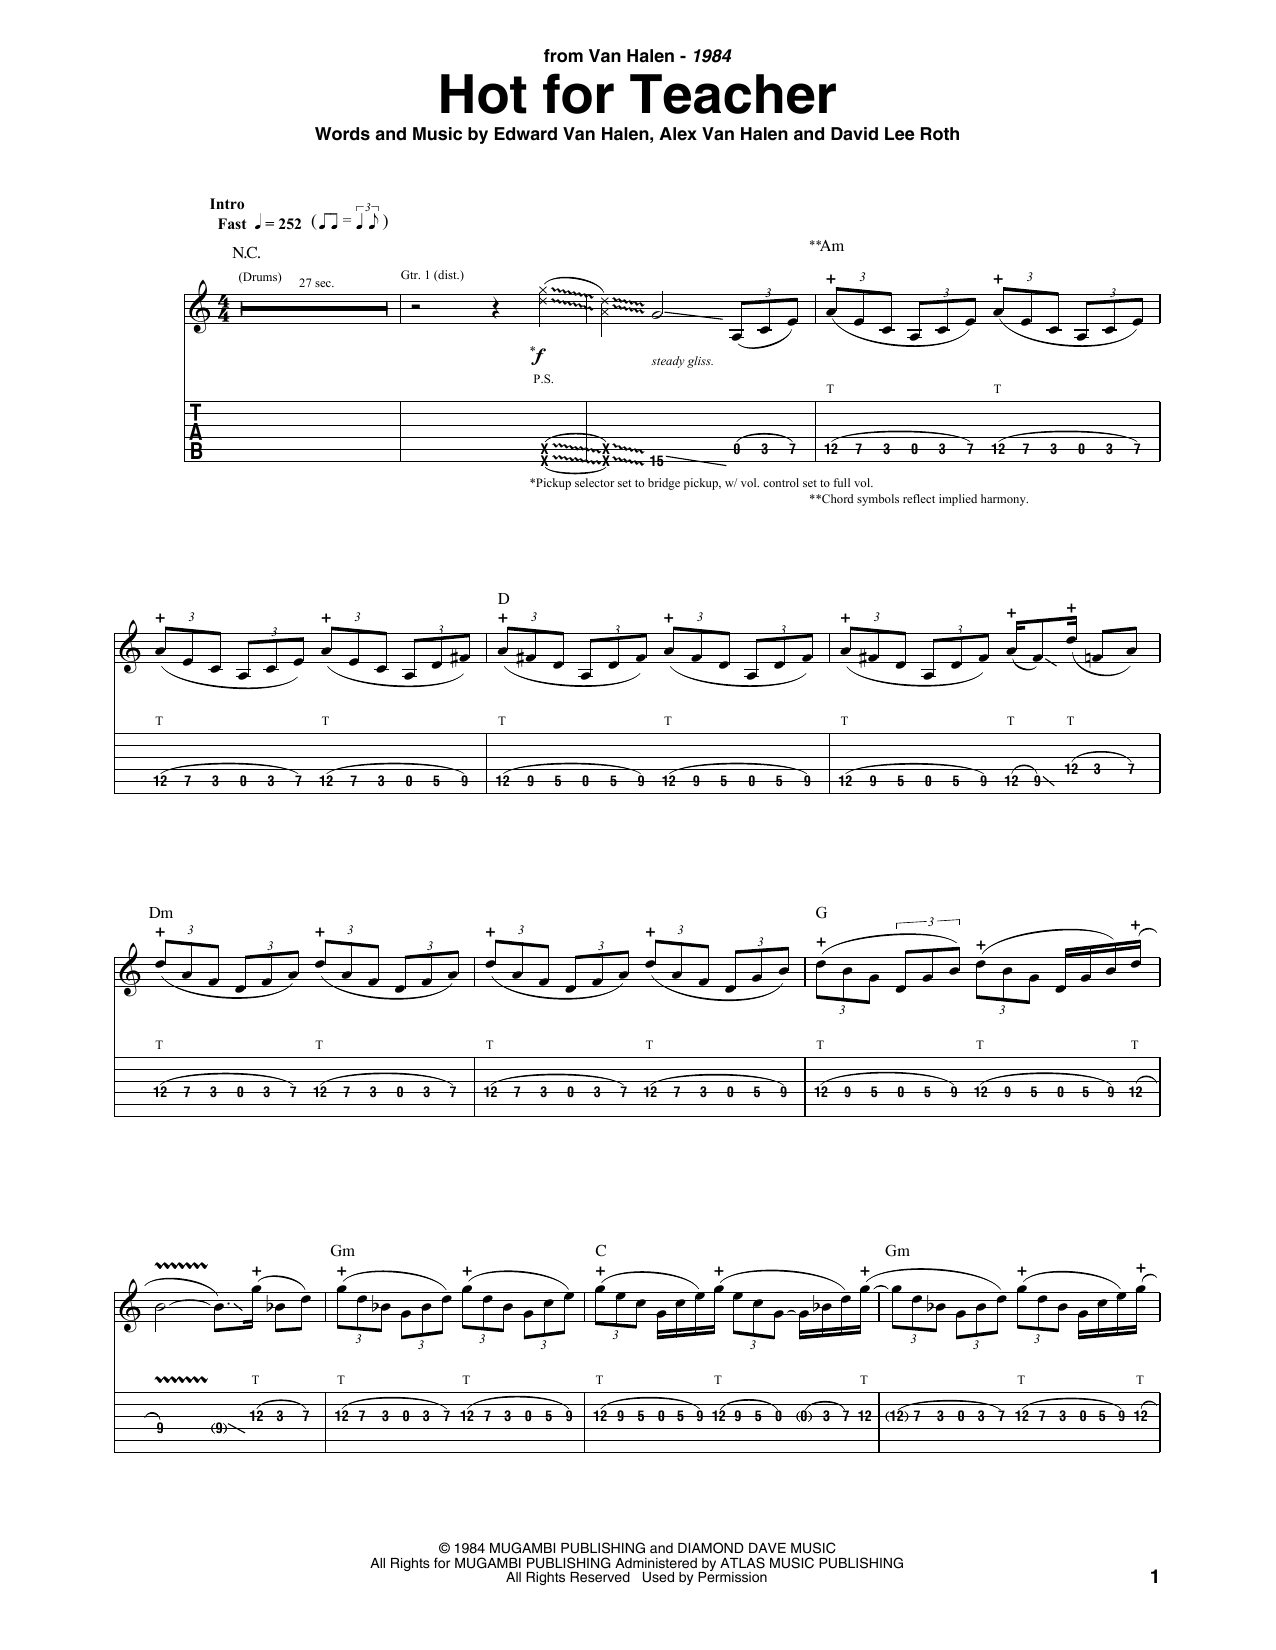 Van Halen Hot For Teacher Sheet Music Notes & Chords for Easy Guitar Tab - Download or Print PDF